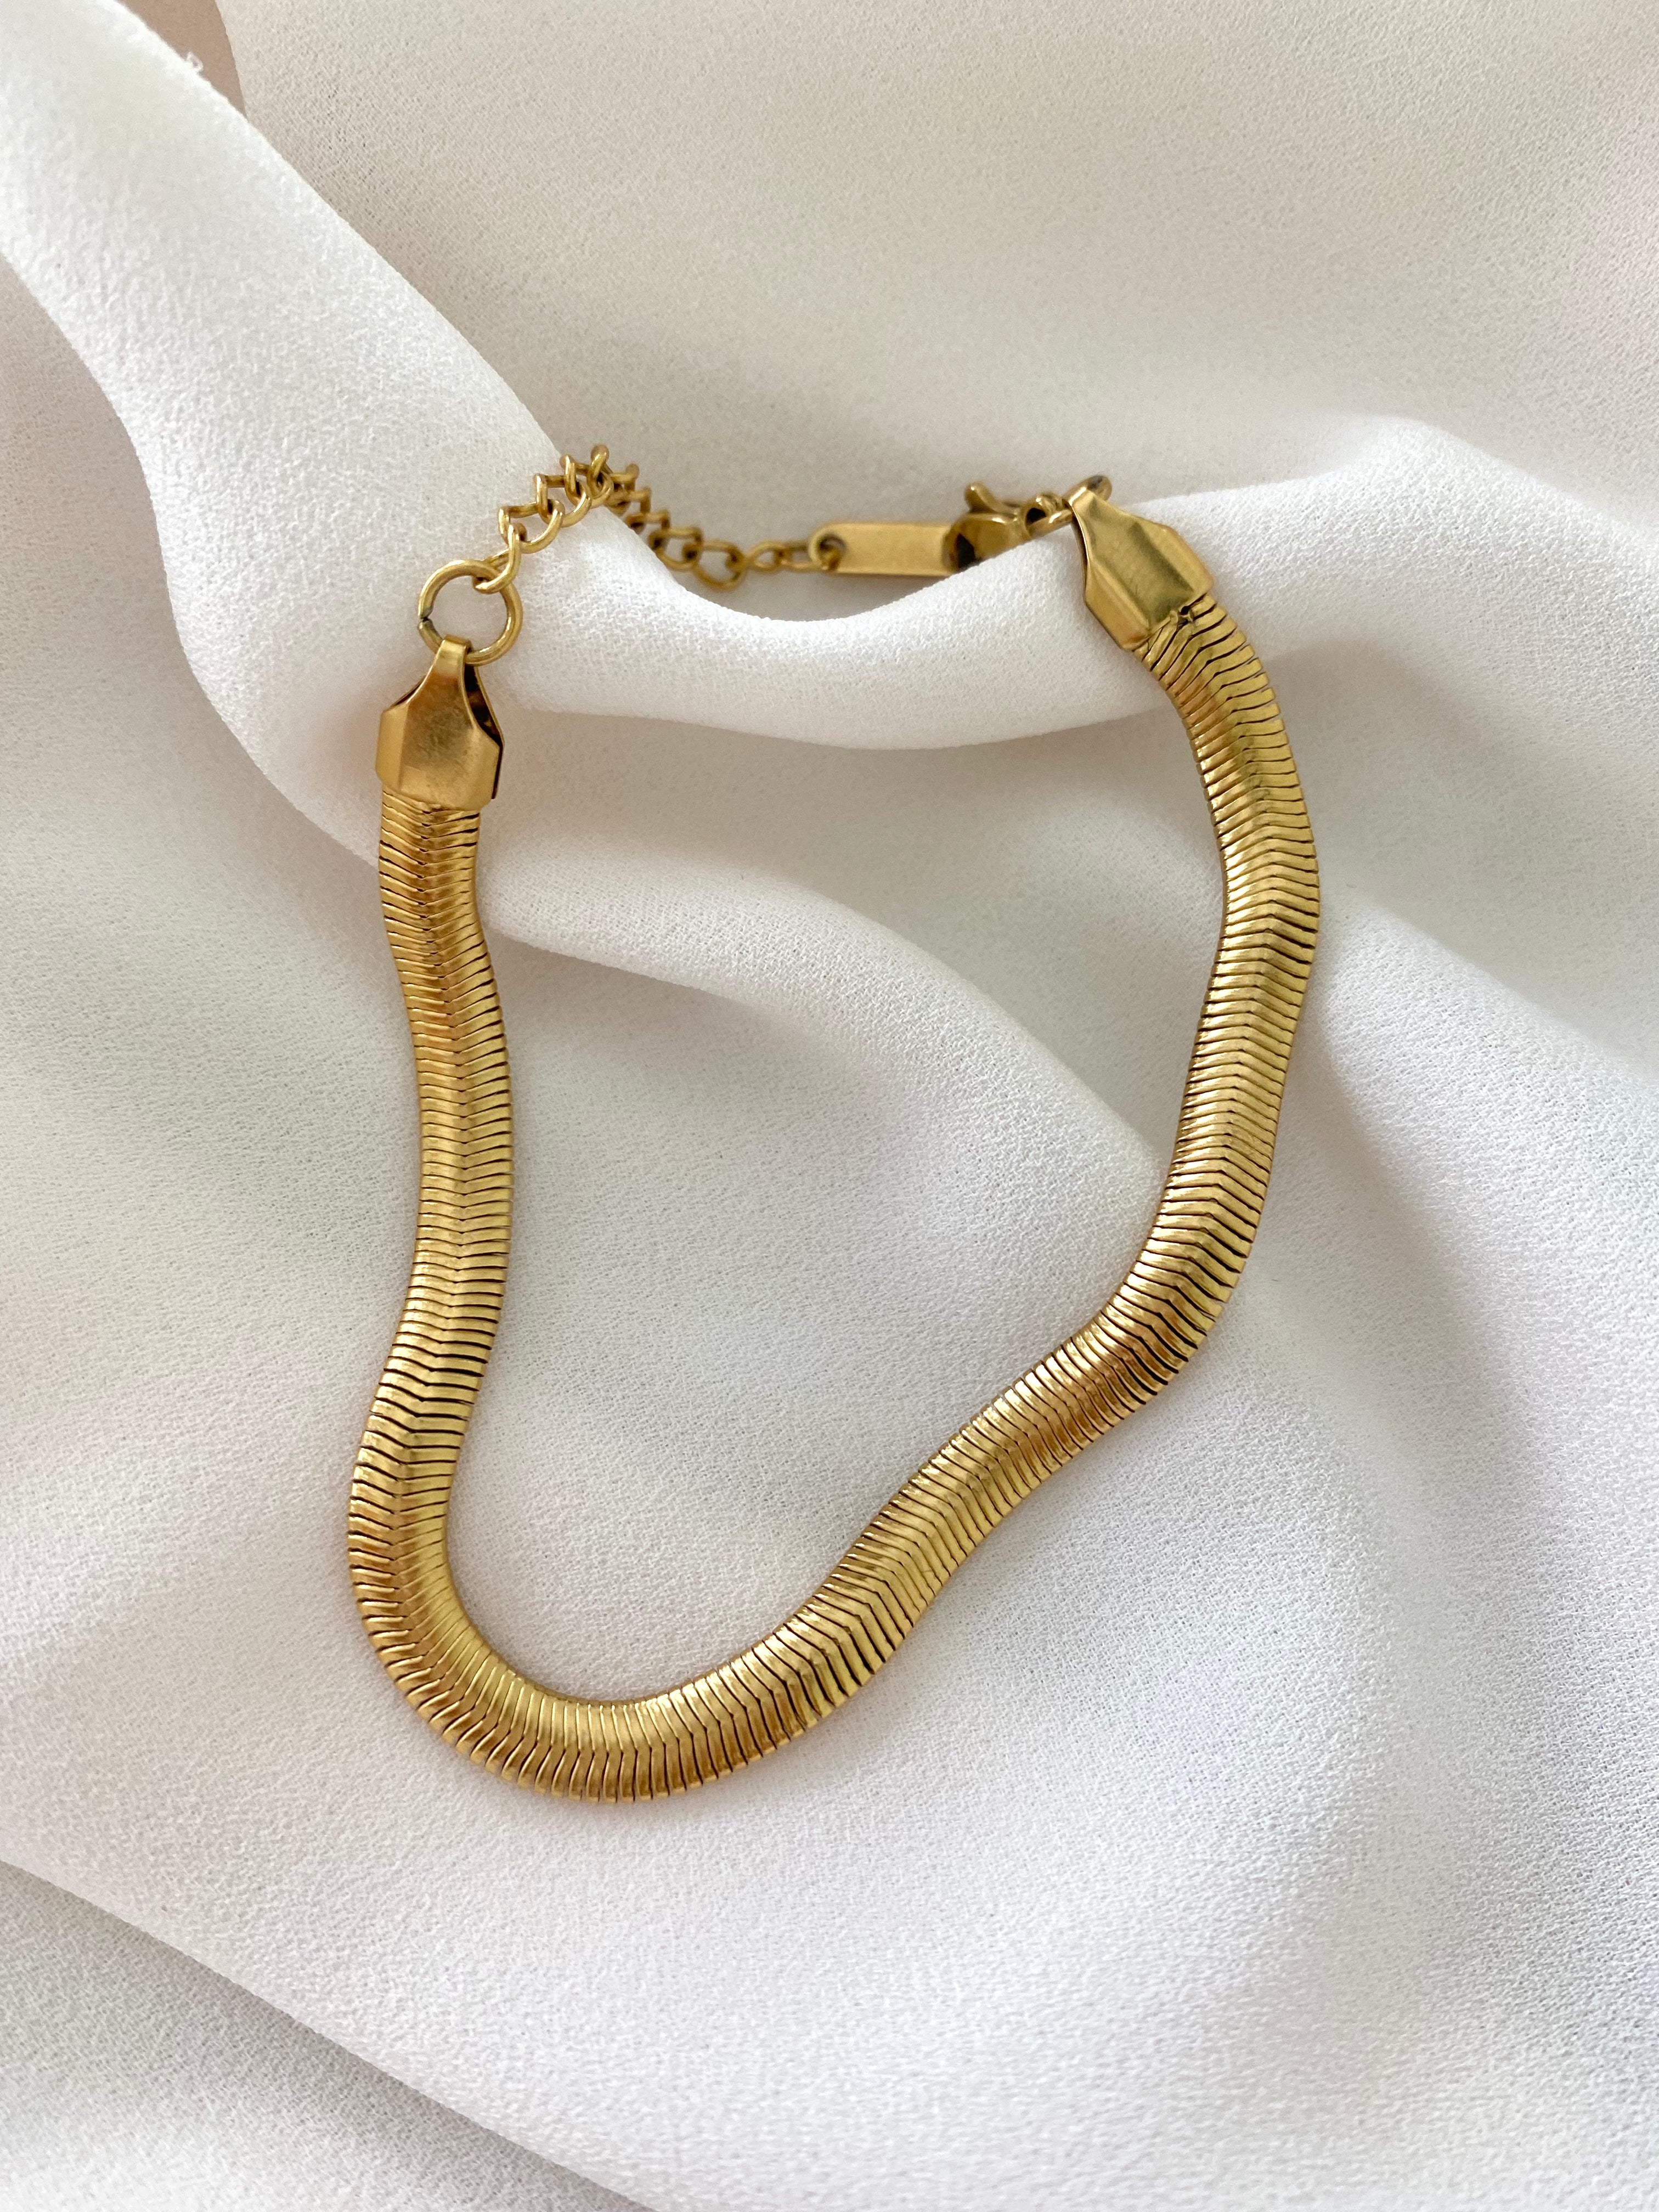 Gold Filled Slinky Bracelet - Vintage Style - Thick Herringbone Chain Bracelet Gift - 5mm